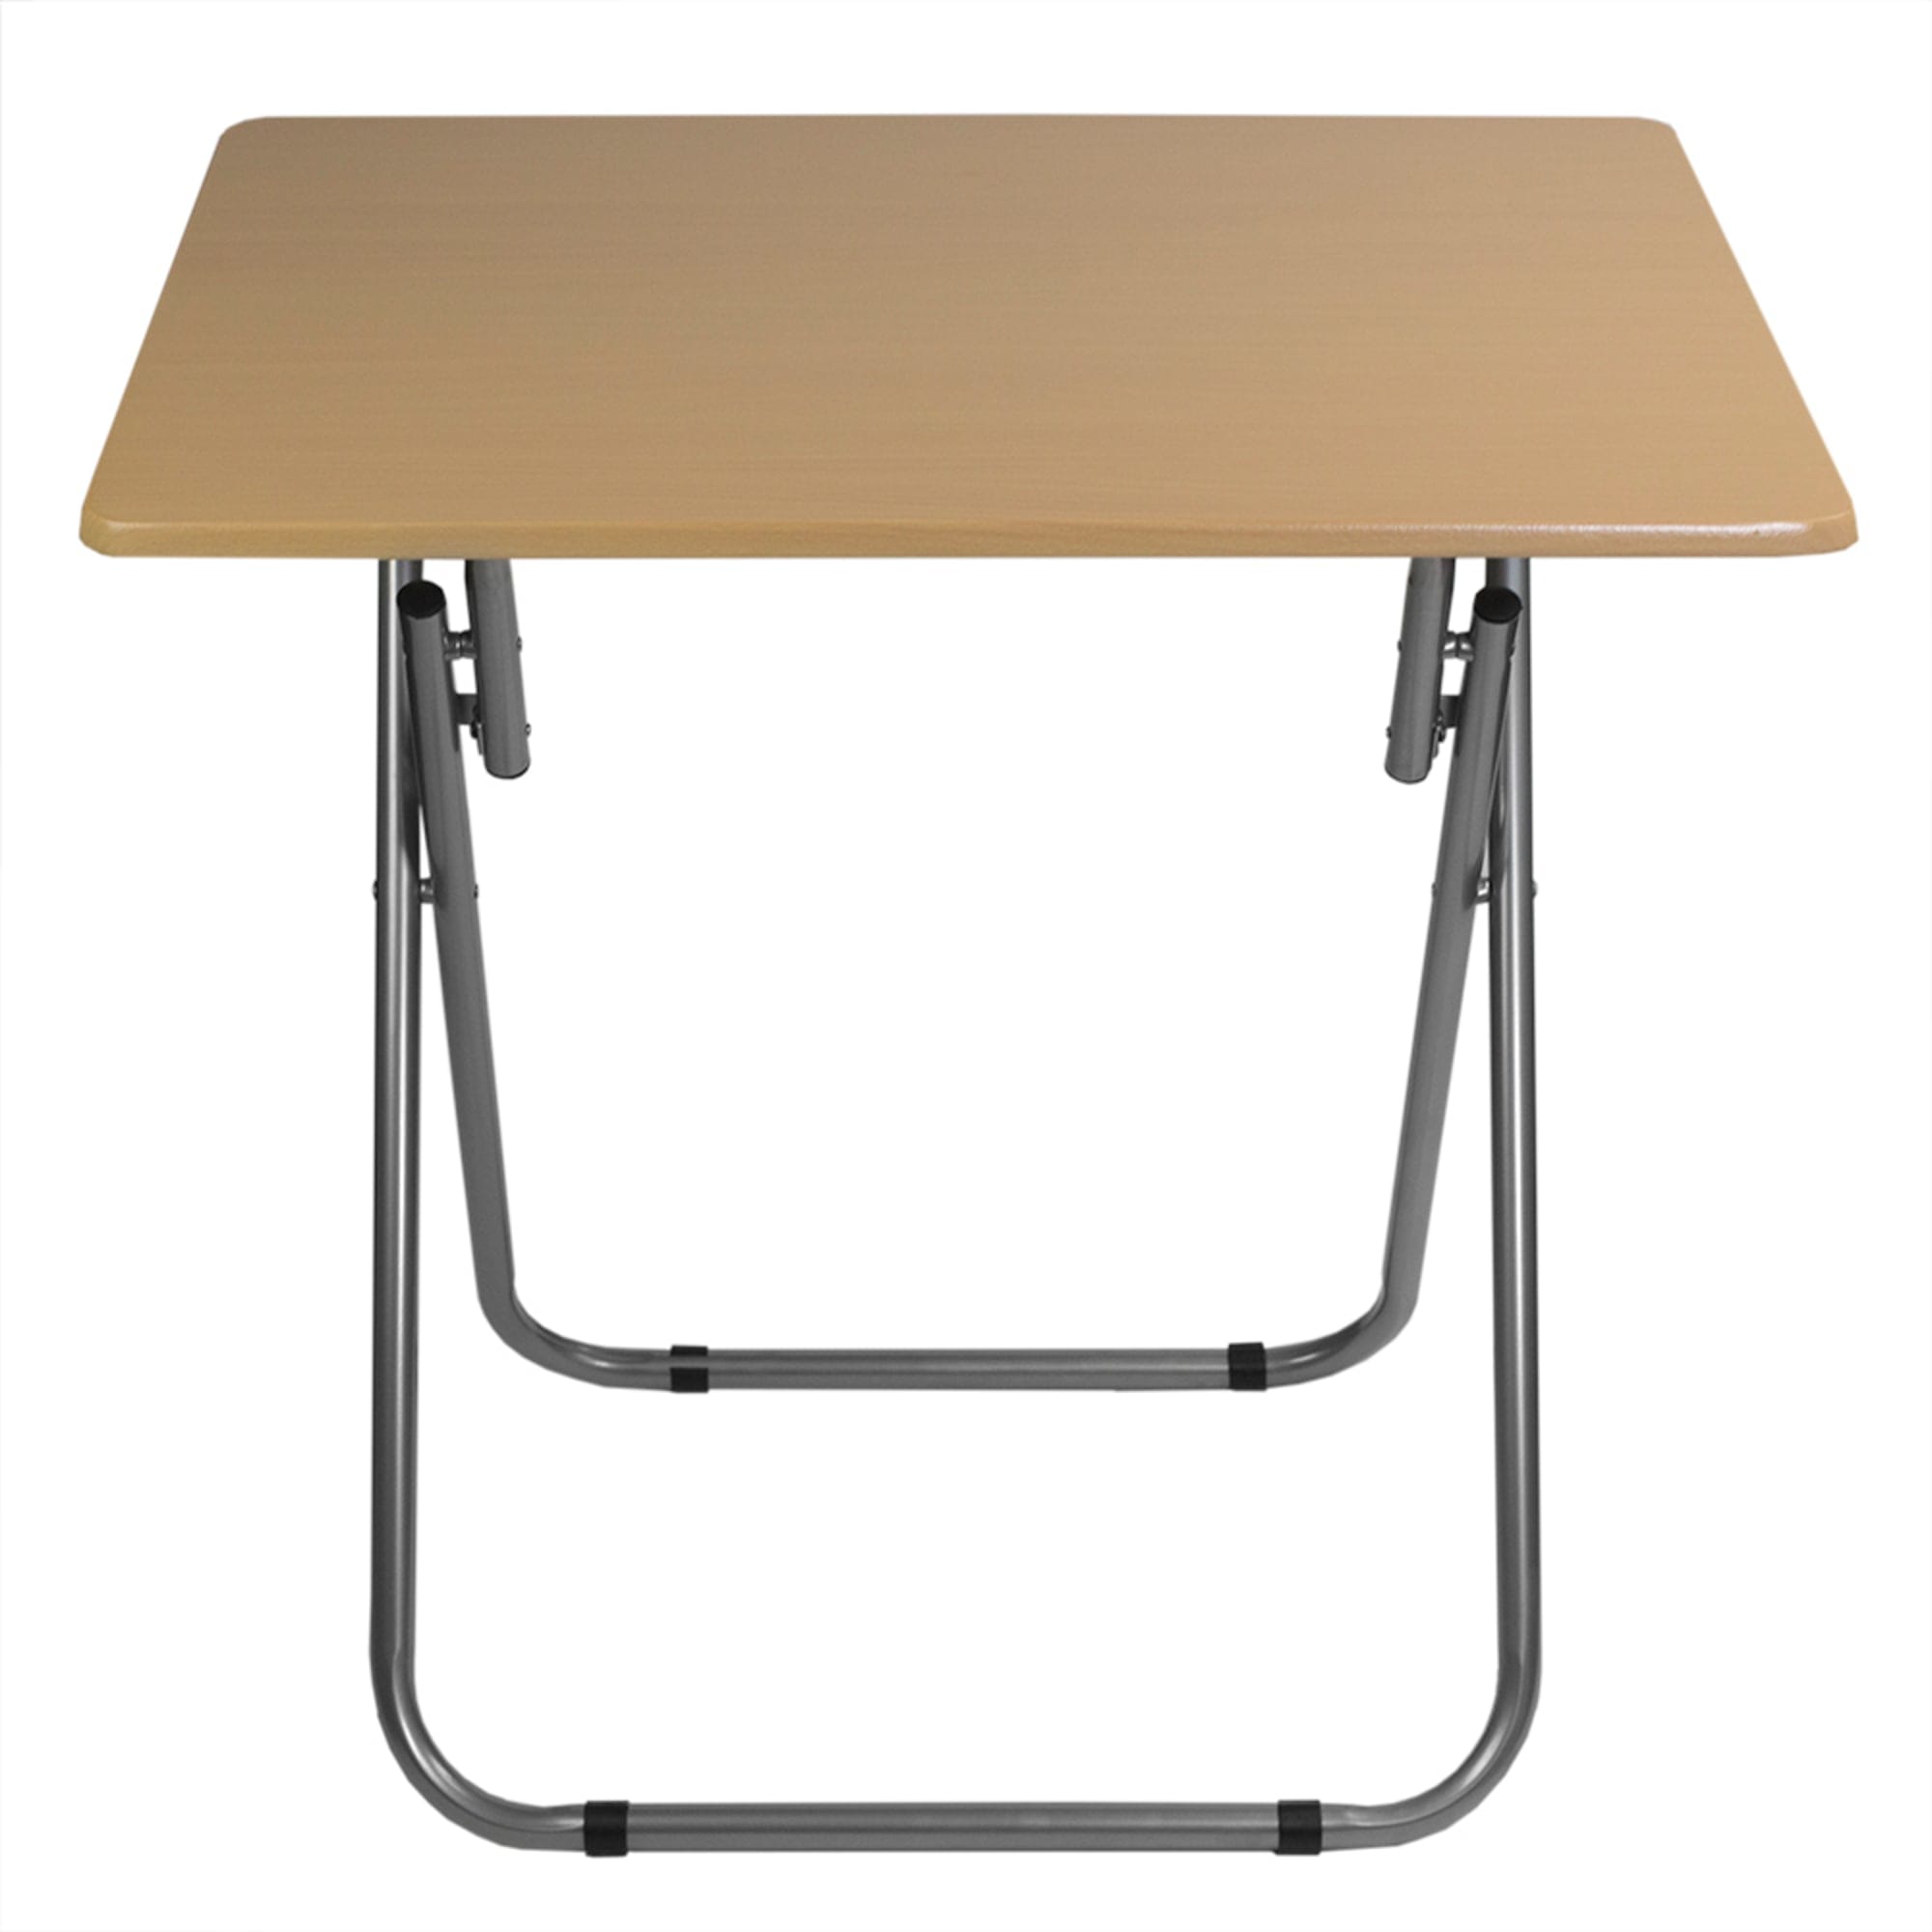 Home Basics Jumbo Multi-Purpose Foldable Table, Natural $20.00 EACH, CASE PACK OF 4